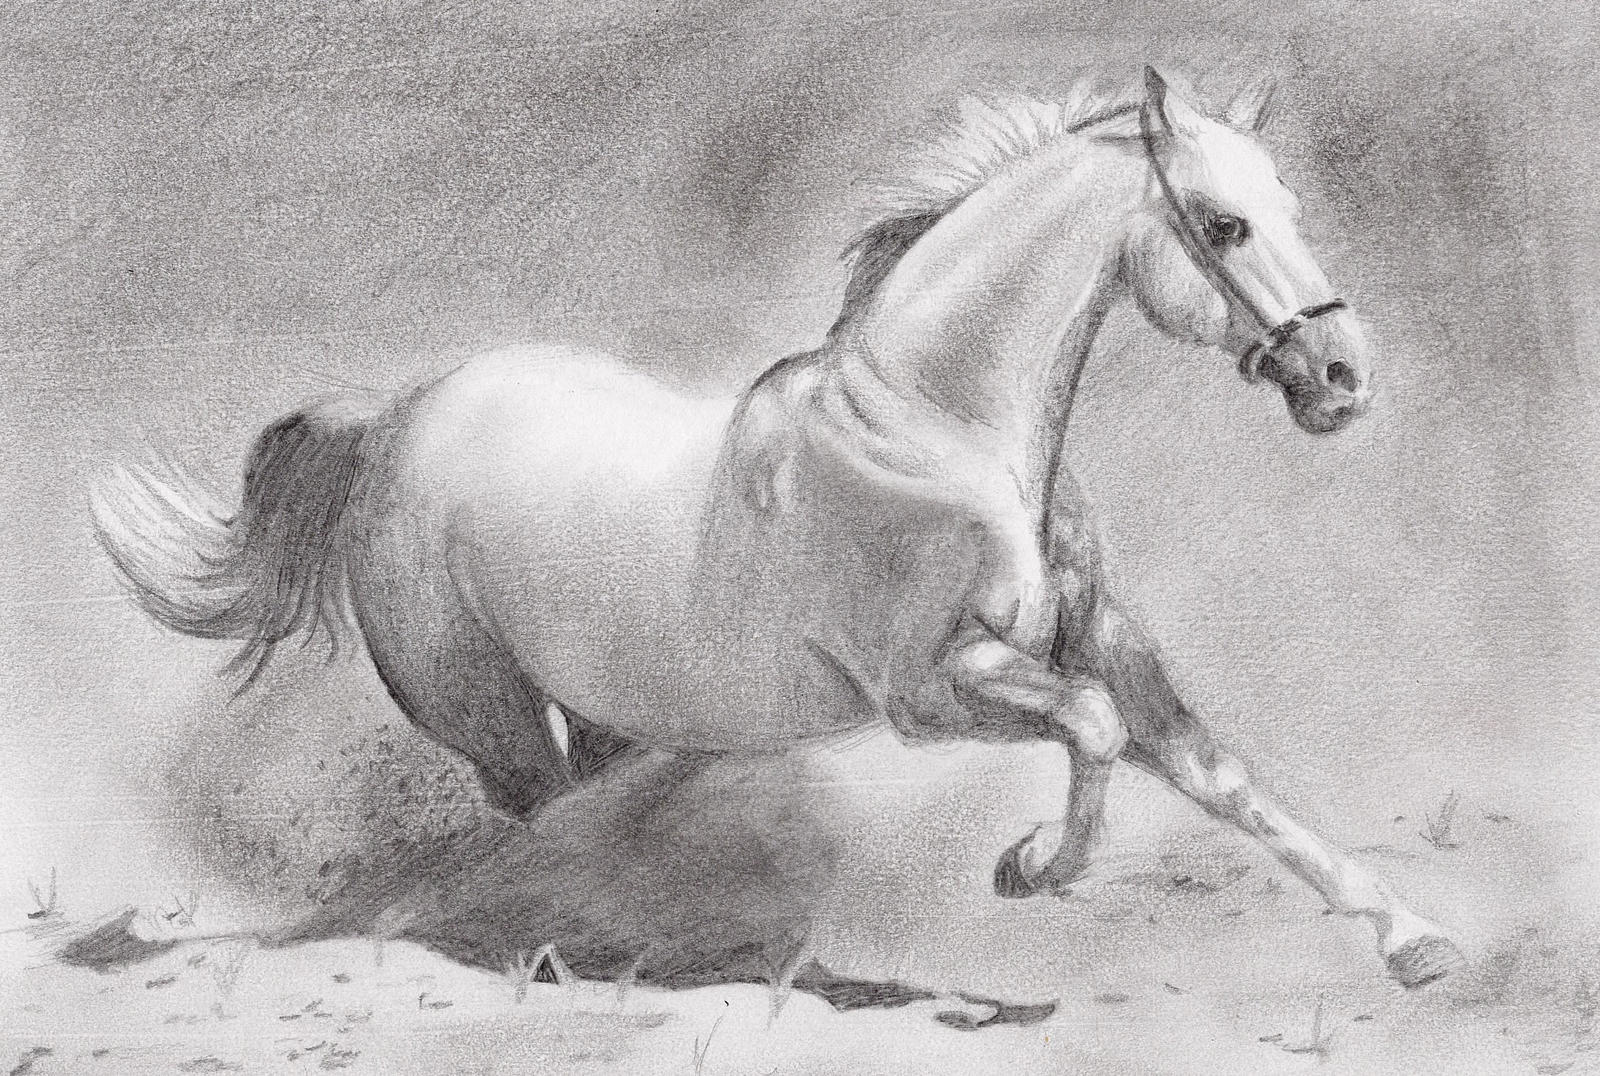 running horse sketch by russiawantsvodka on DeviantArt